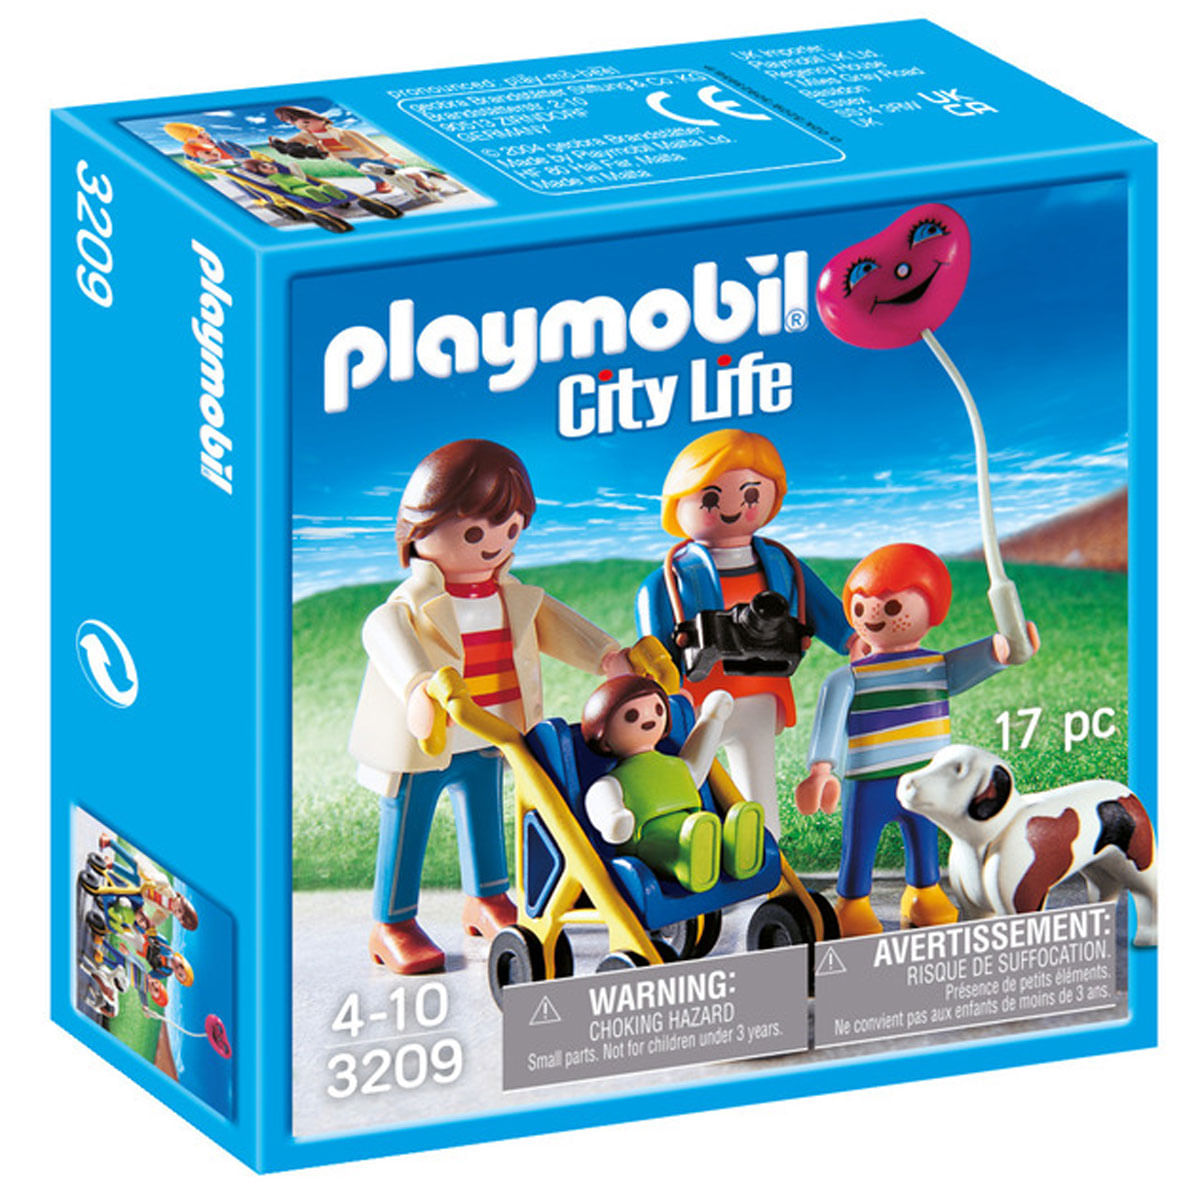 PlayMobil City Life 